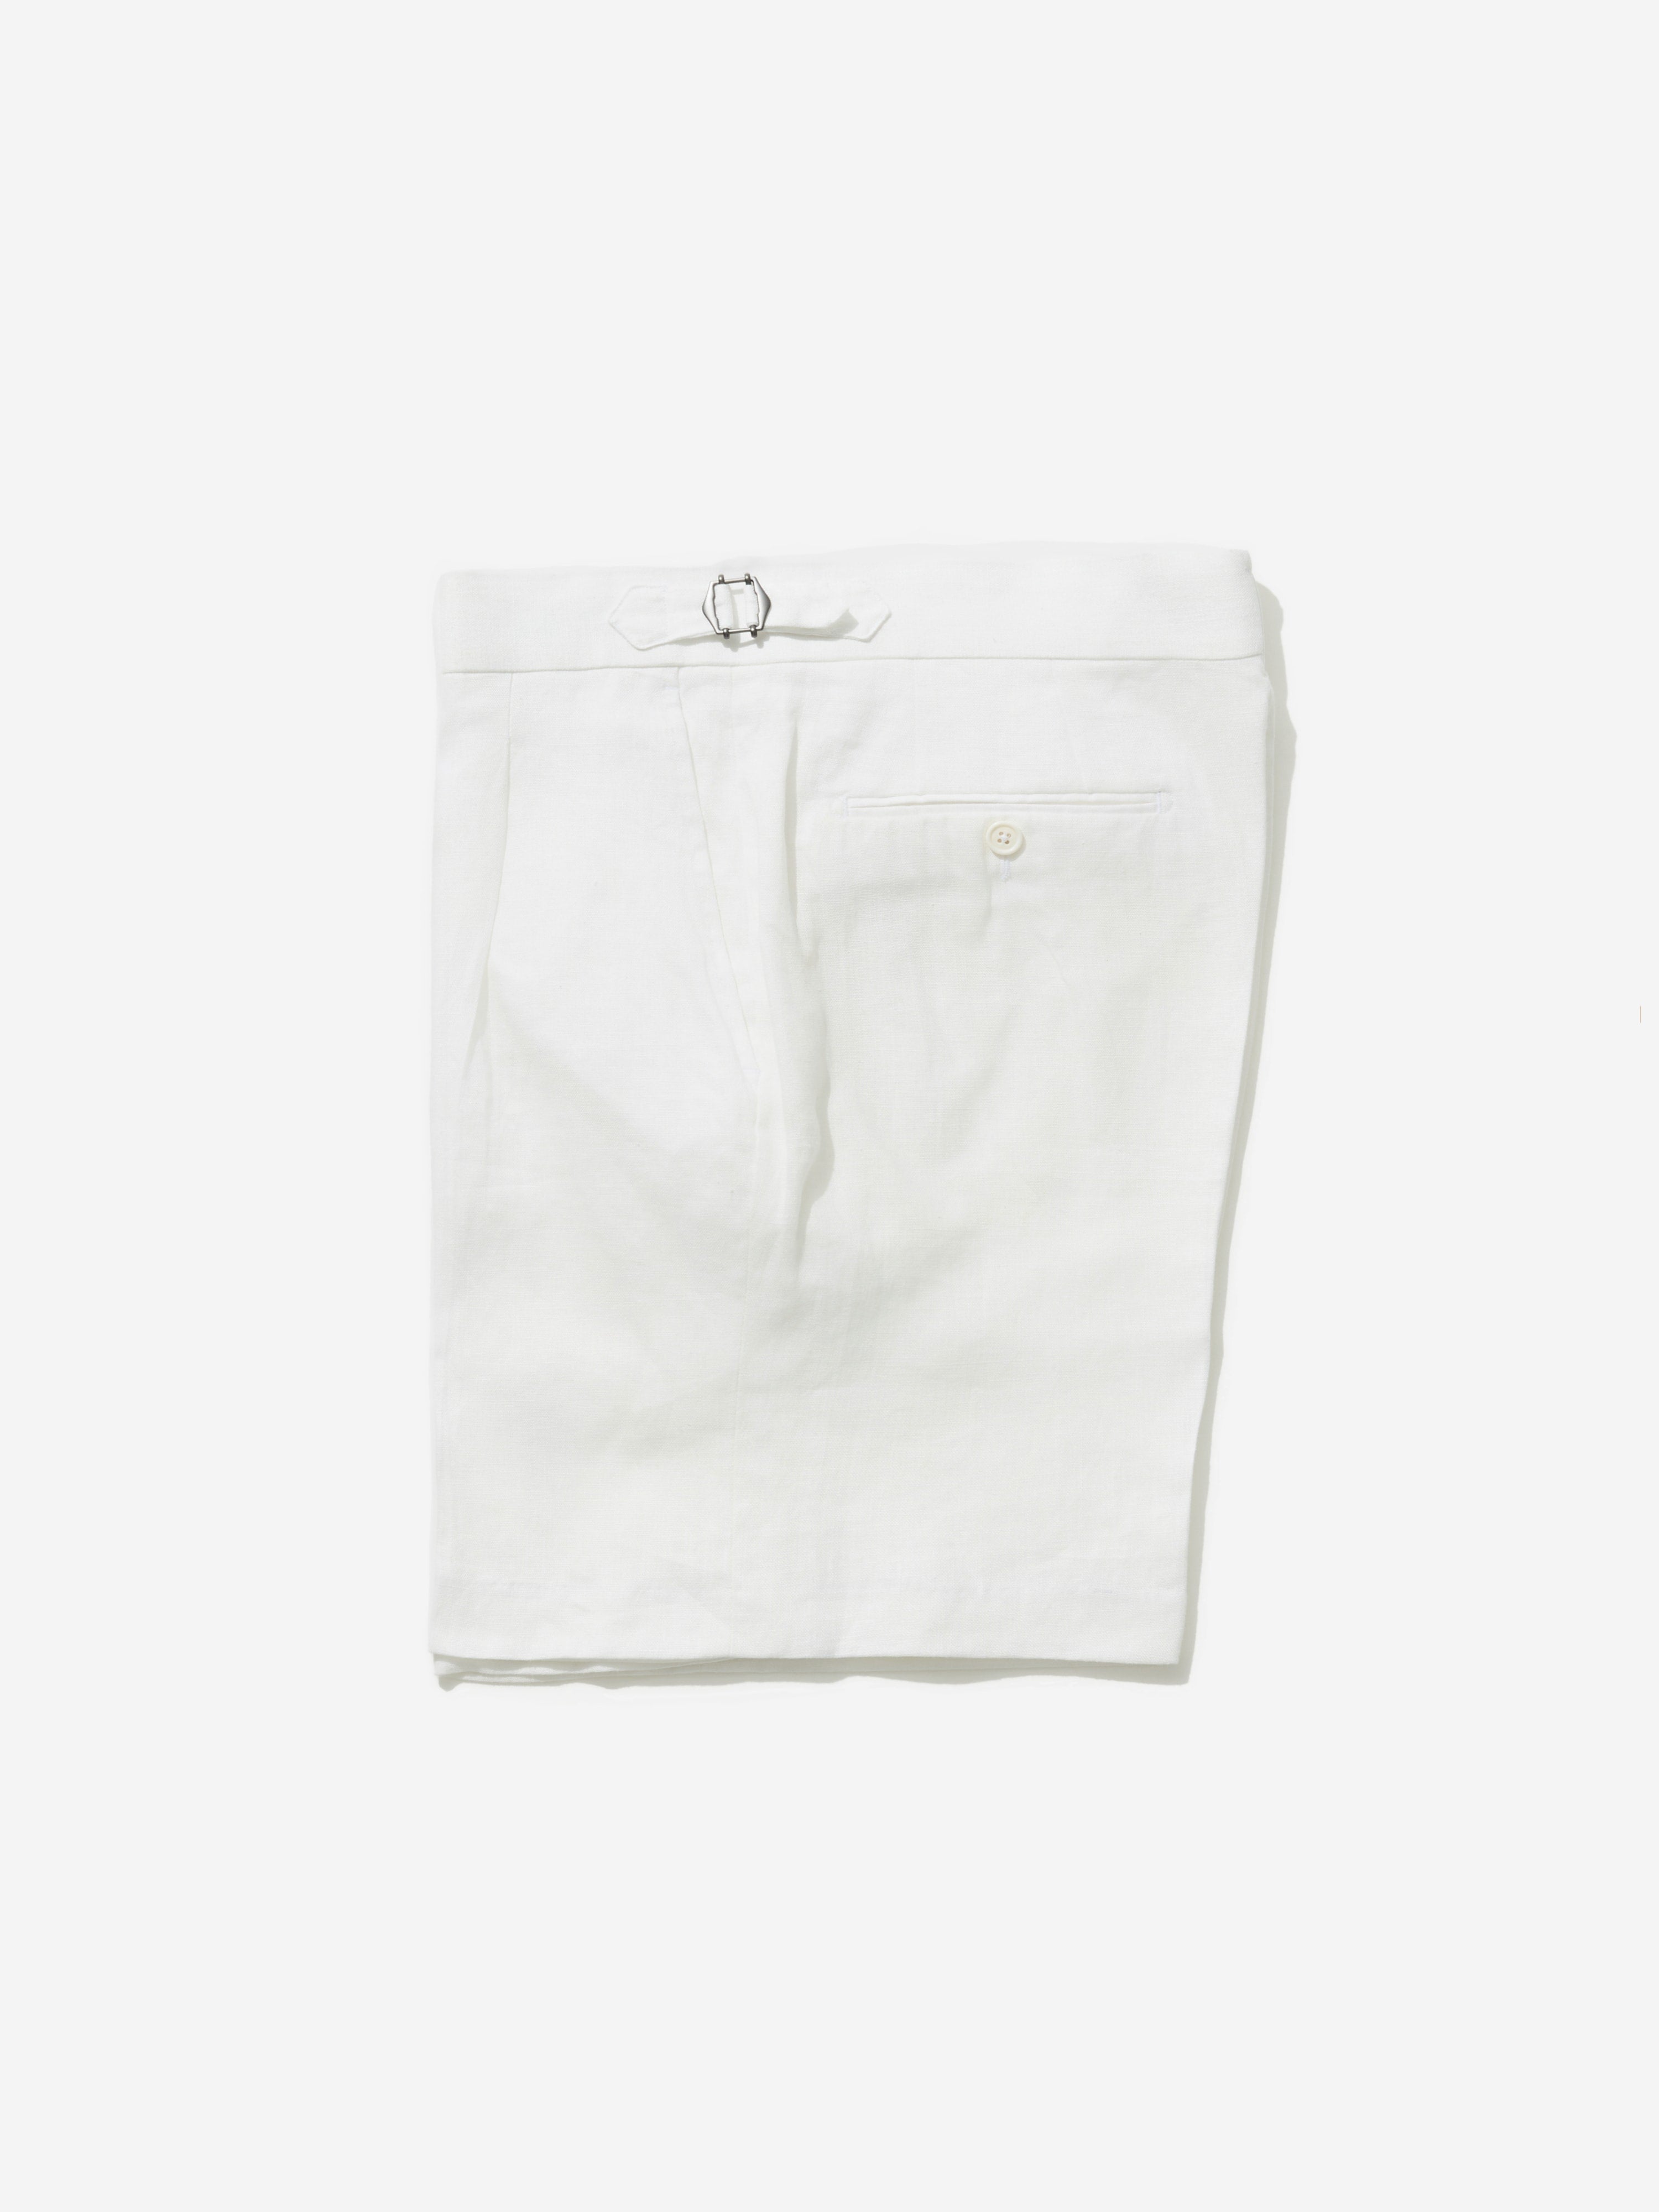 White Linen Oscar Shorts (Wide Fit) - Grand Le Mar